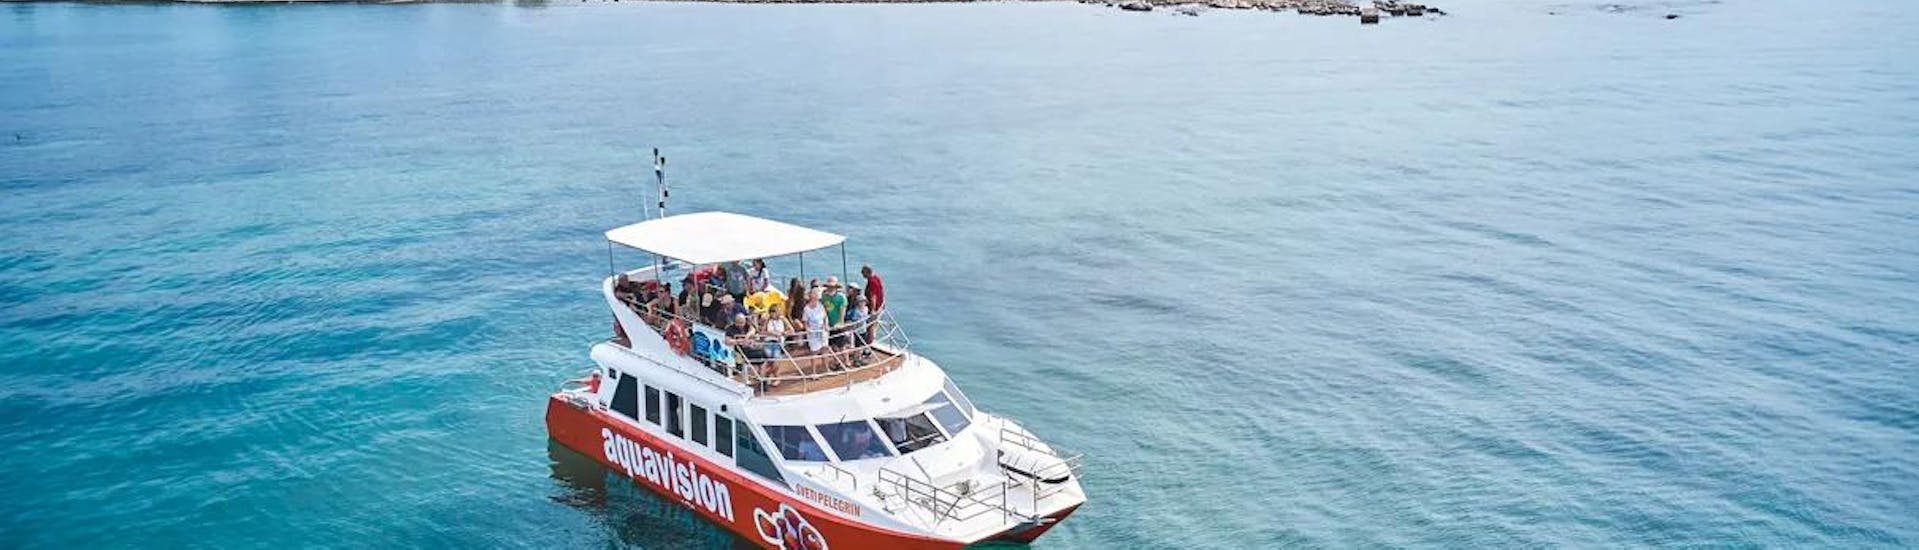 Aquavision's Glassbottom Catamaran with people on the sundeck. 